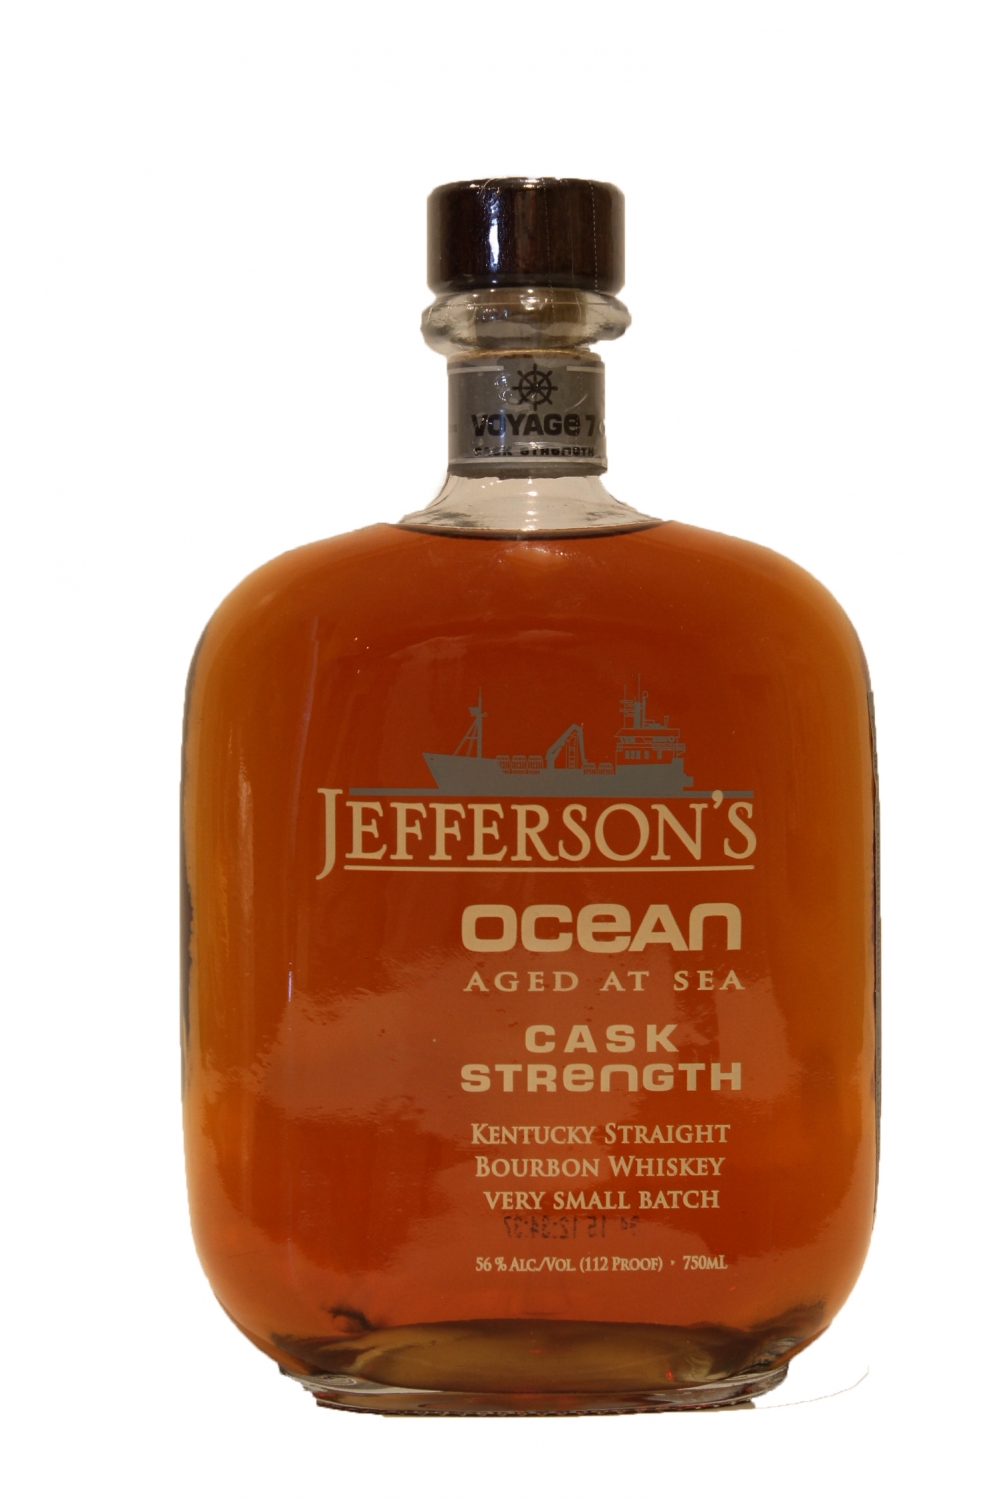 Jefferson's Ocean Aged at Sea Cask Strength